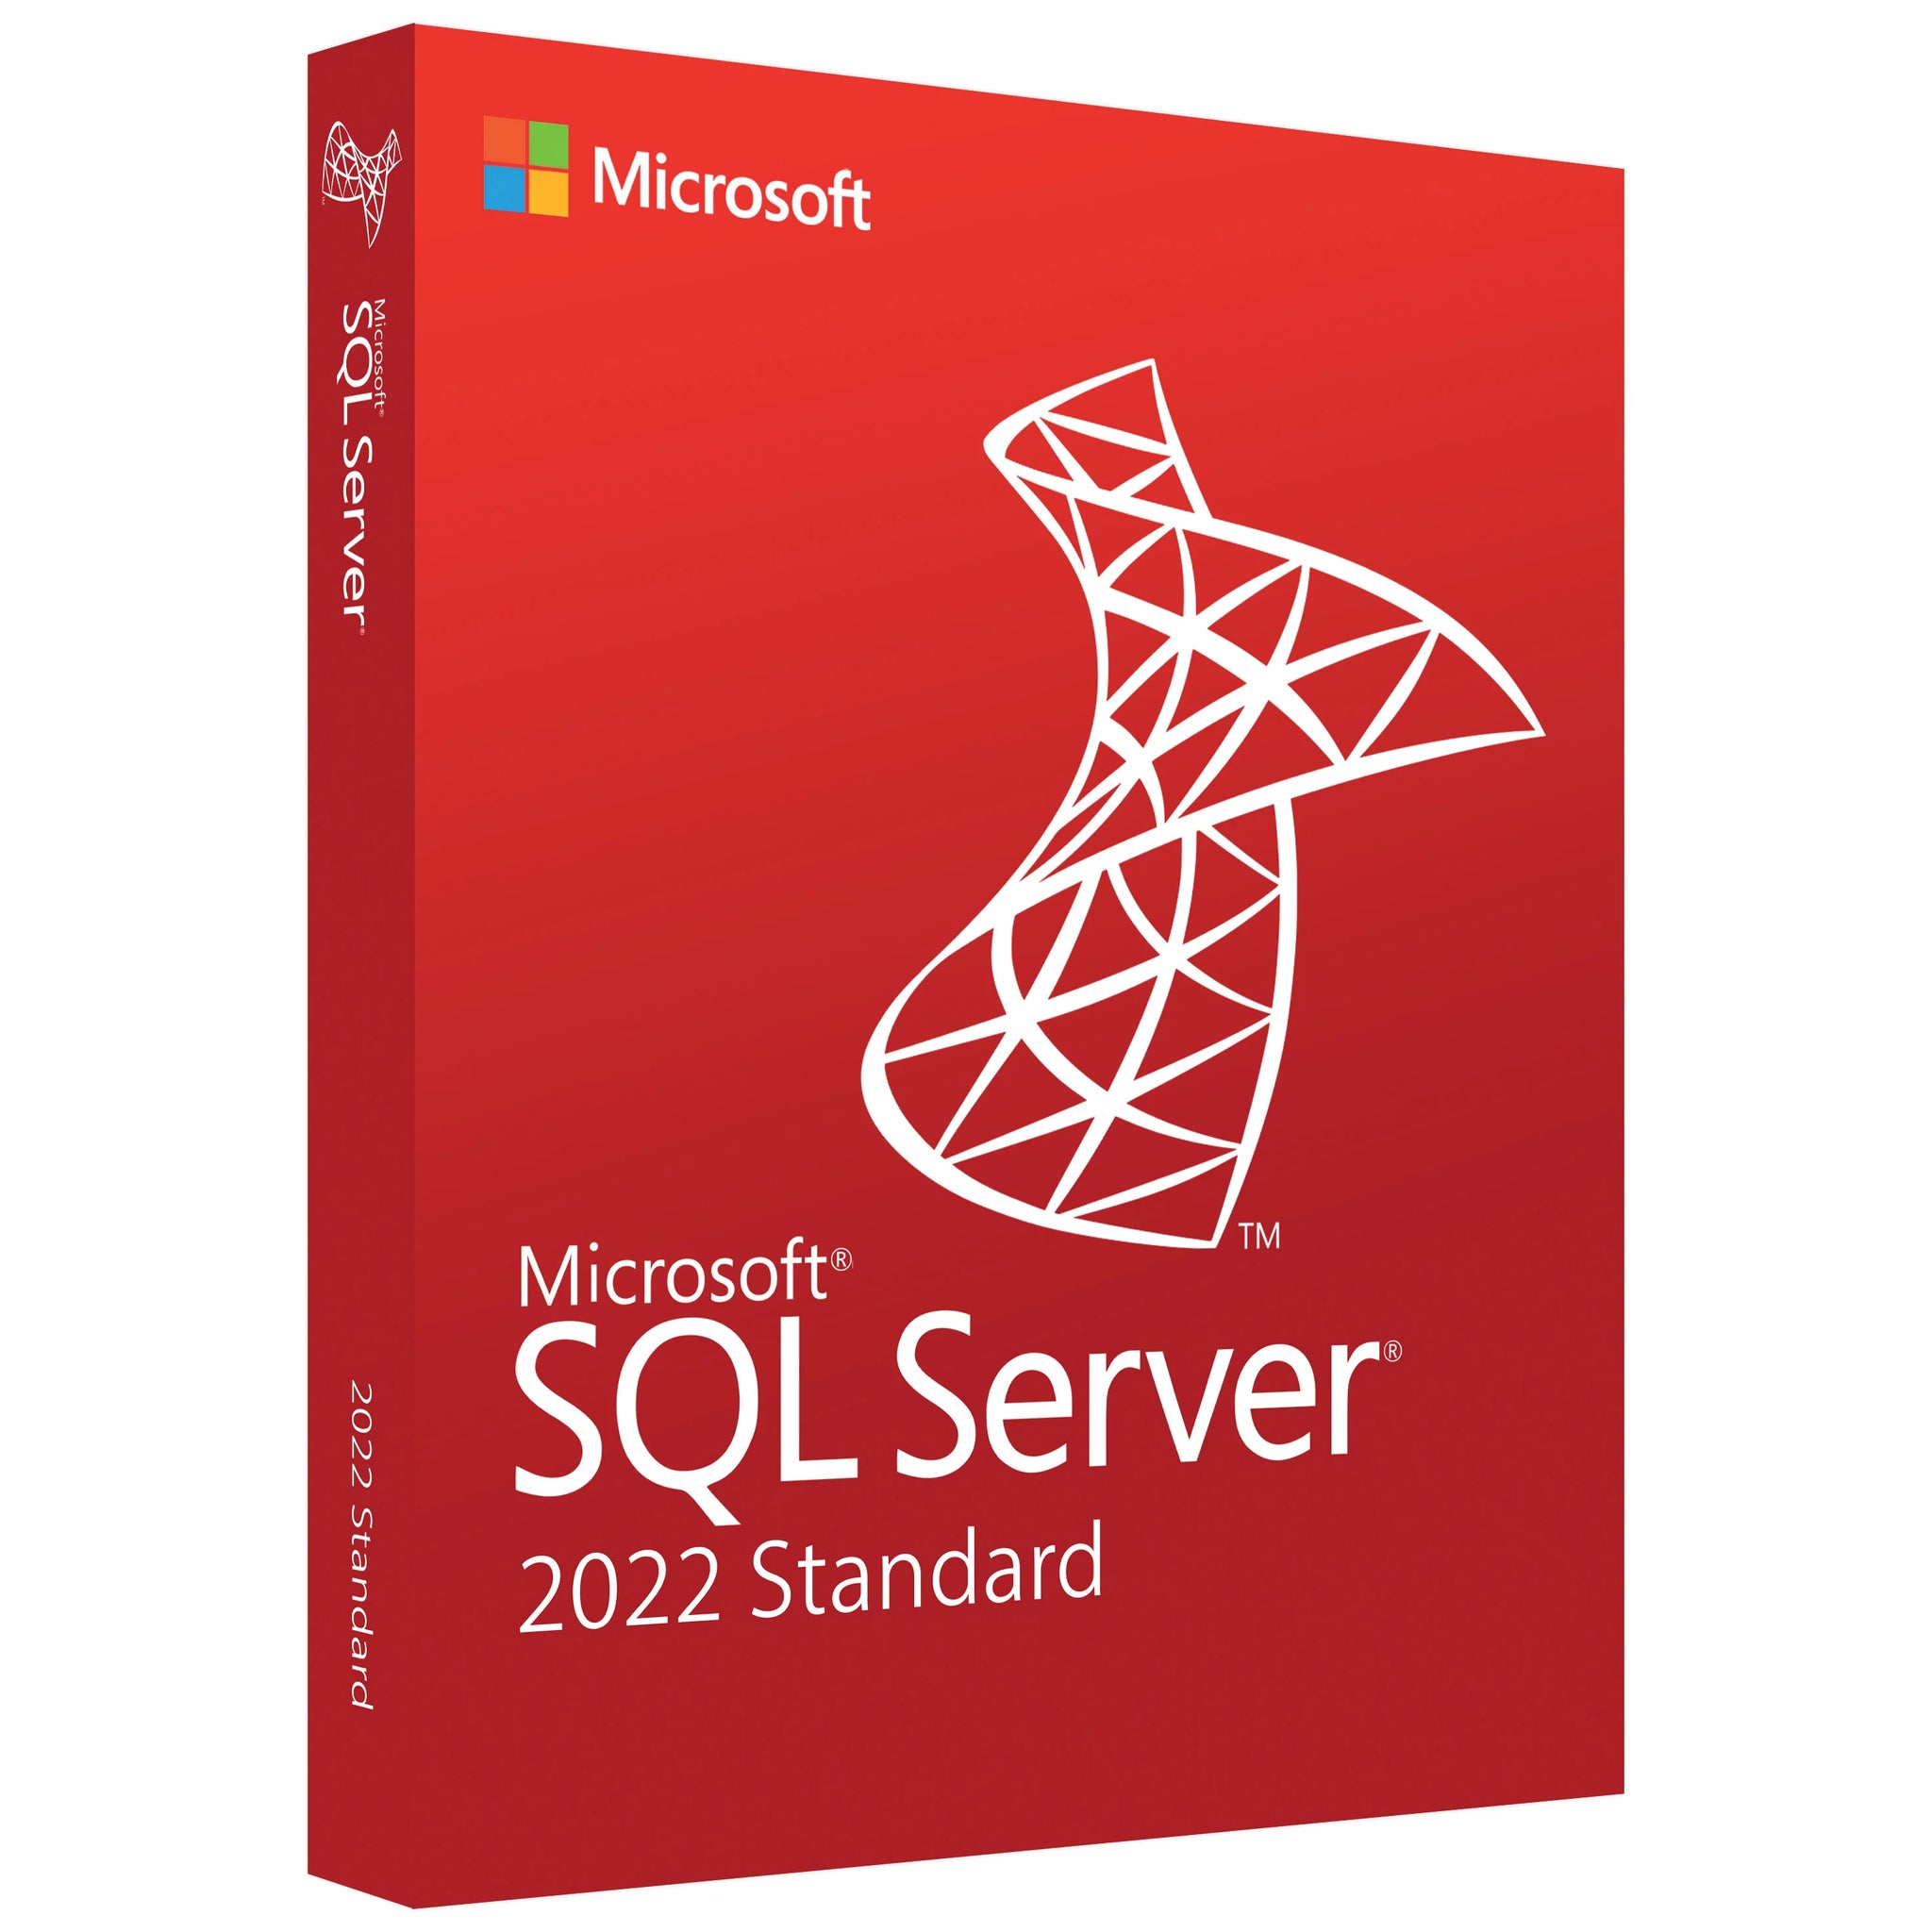 Microsoft SQL Server 2022 Standard - Lifetime License Key